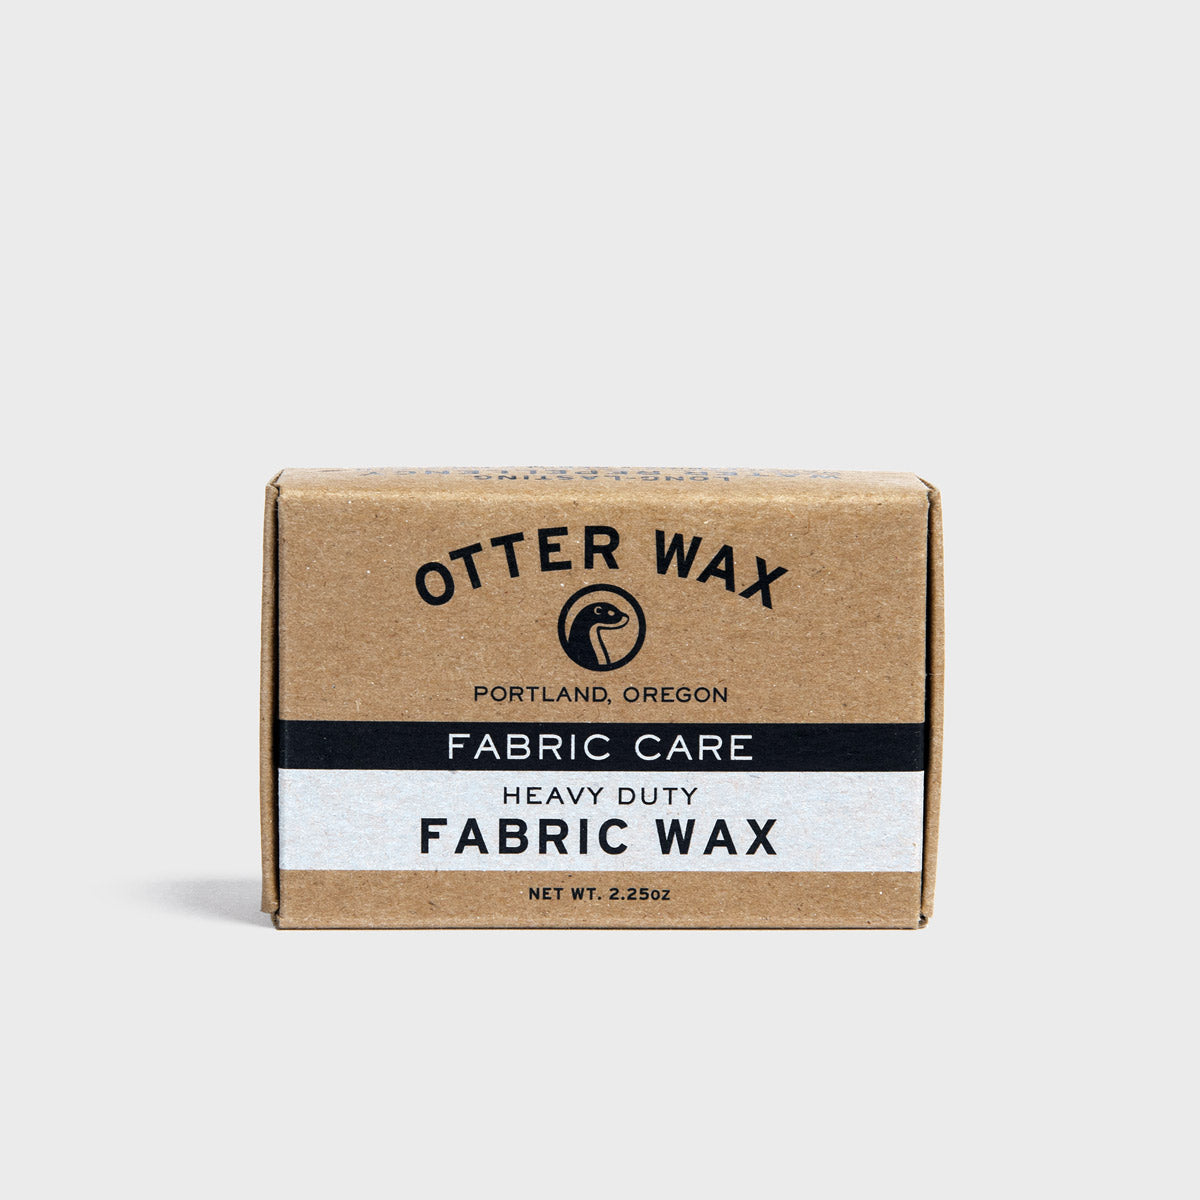 Otter Wax Saddle Soap